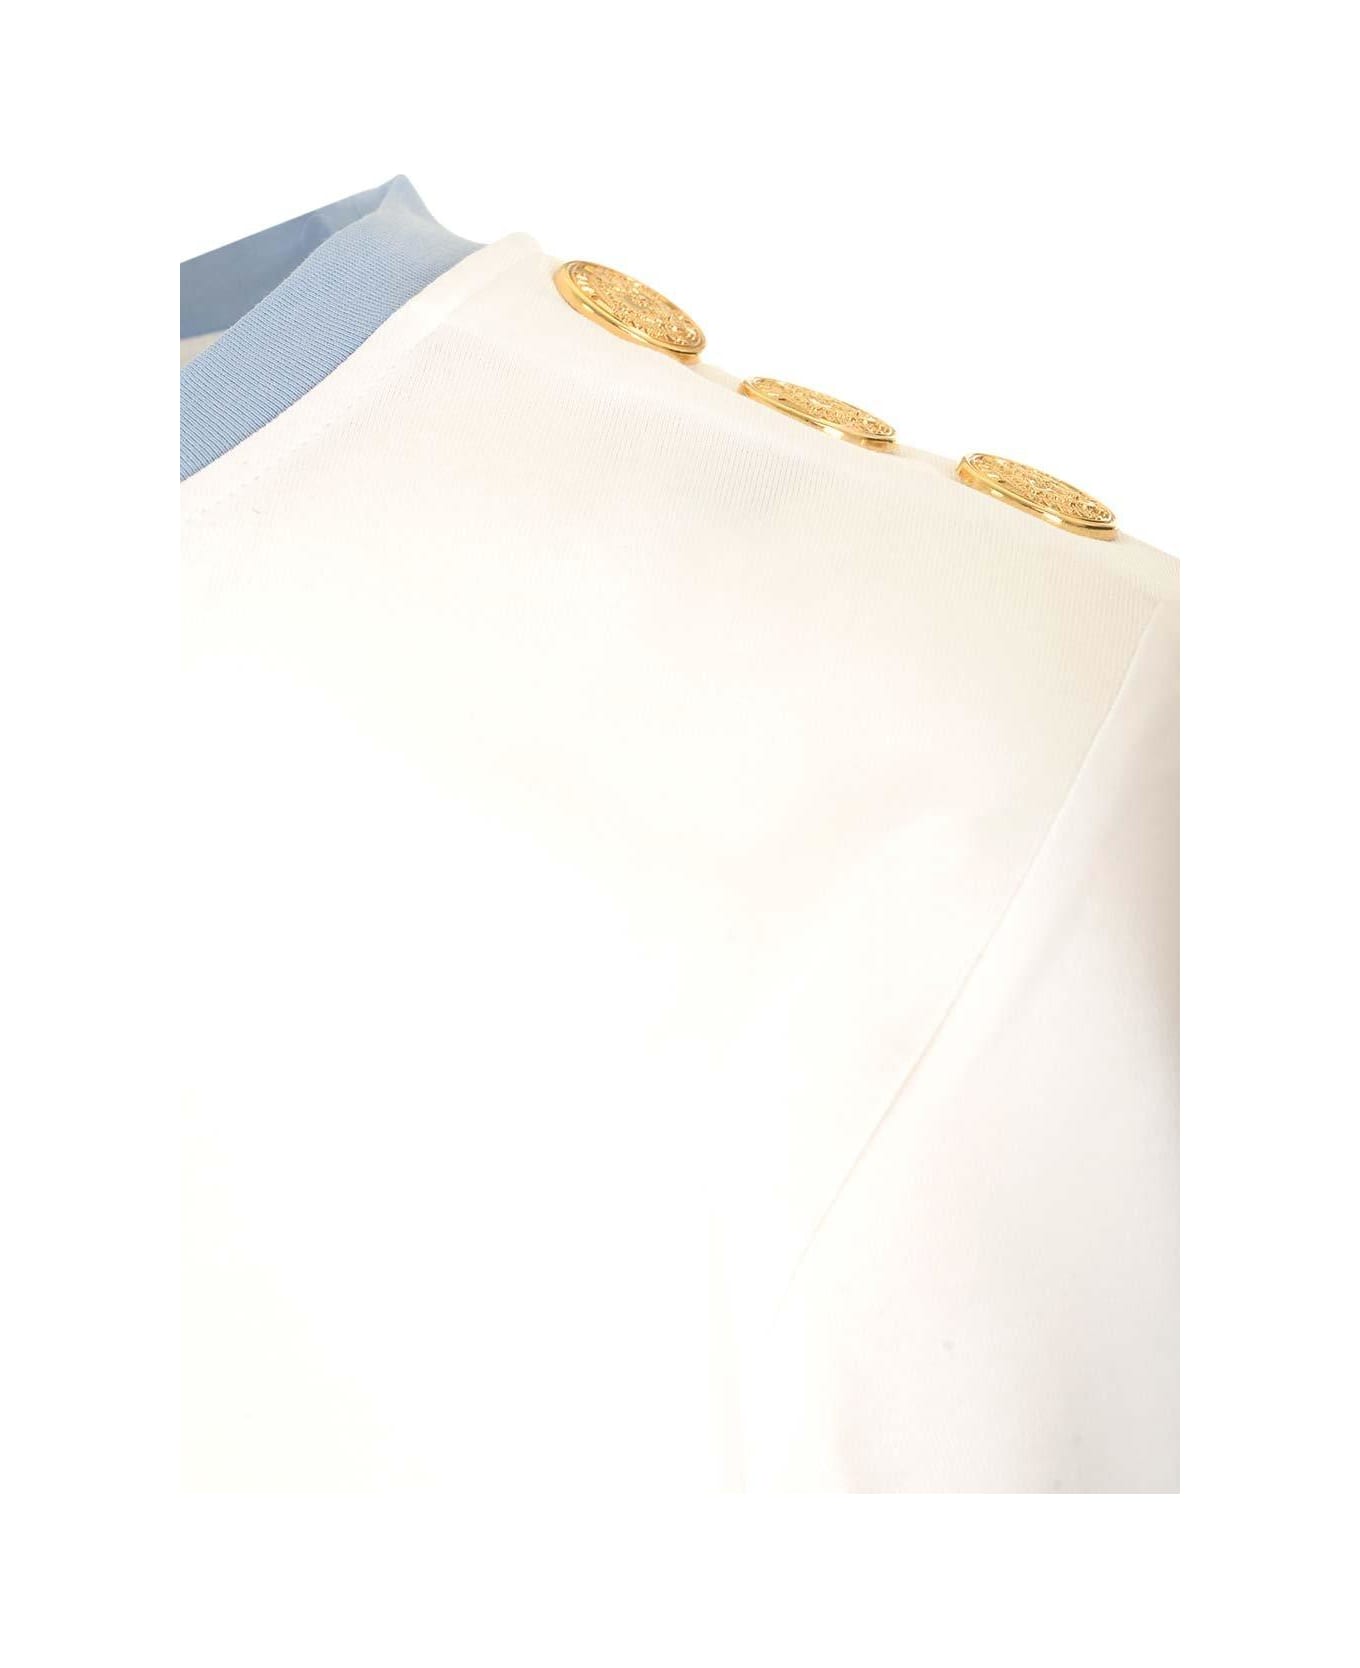 Balmain Detailed T-shirt - White